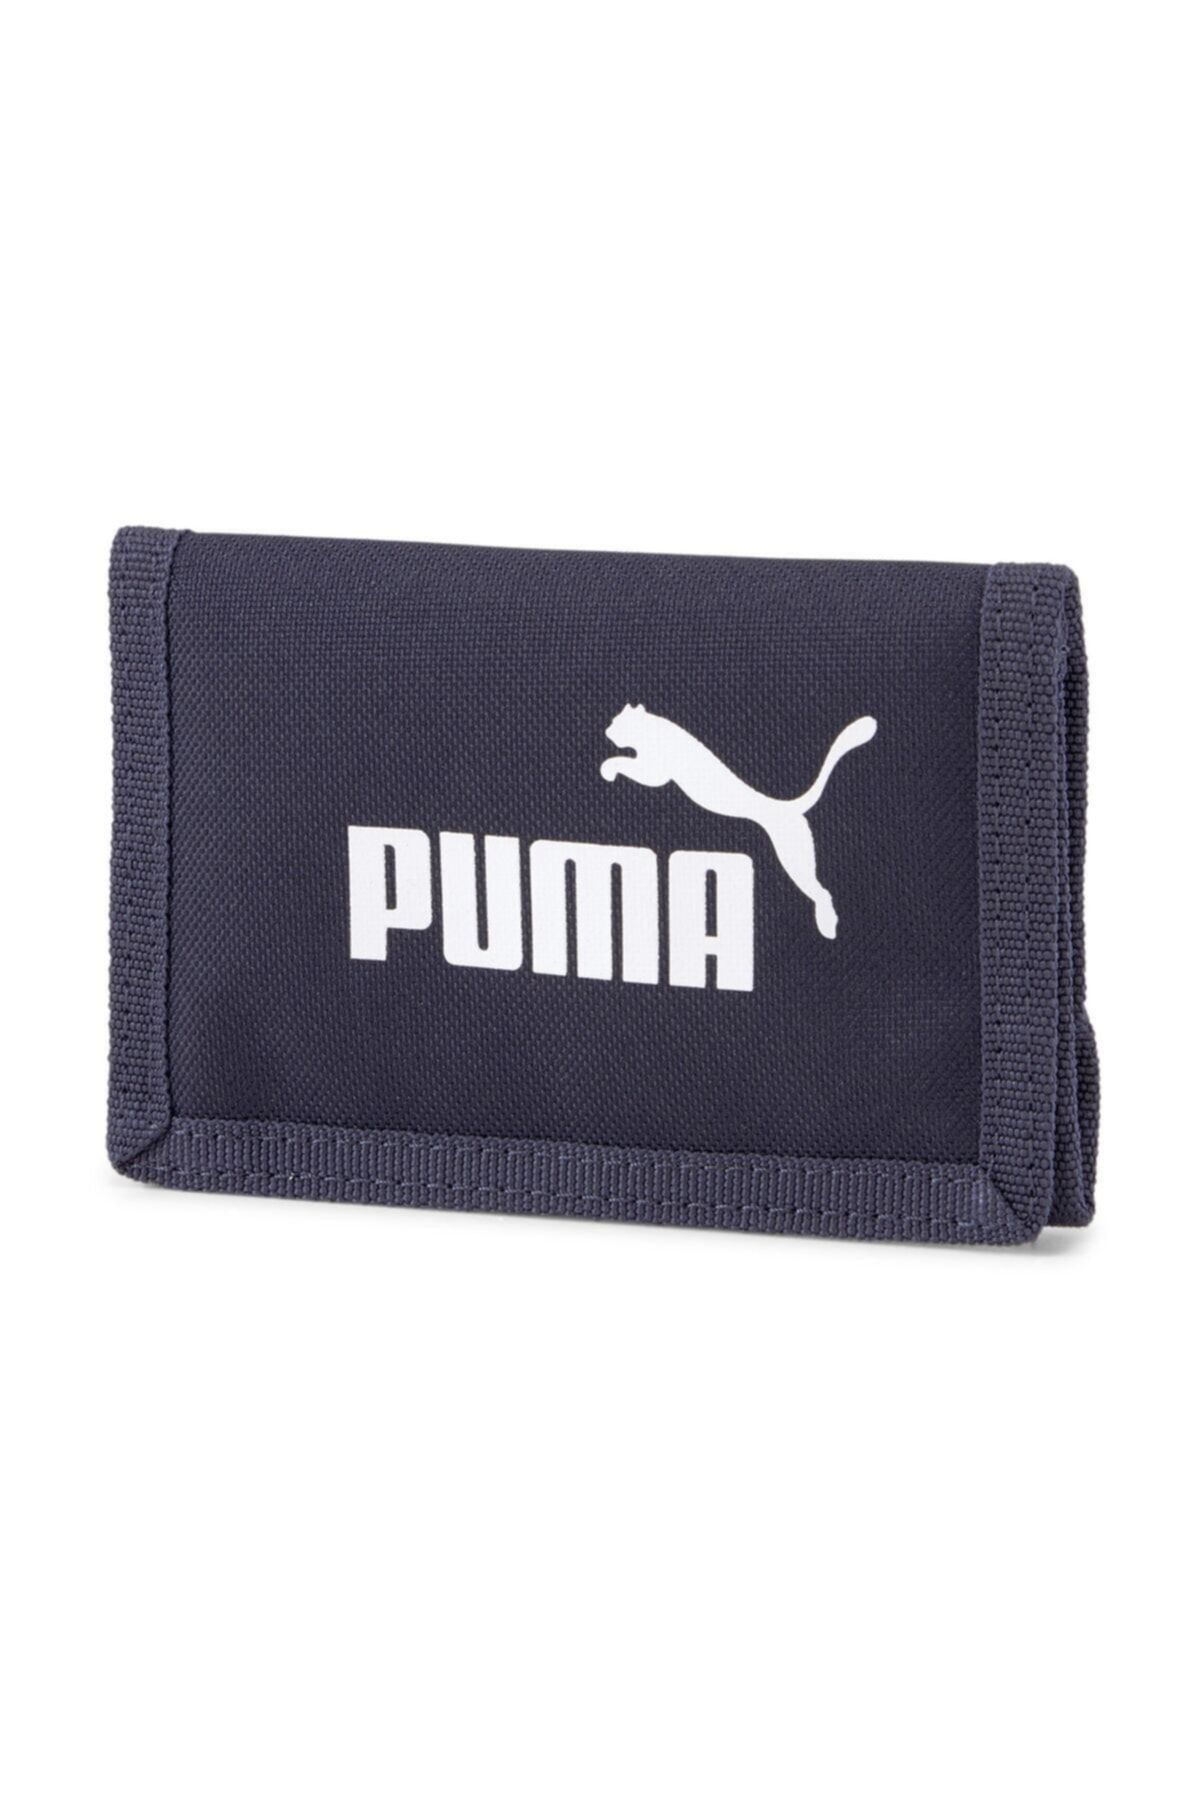 Puma Unisex Cüzdan - Phase Wallet Peacoat - 07561743